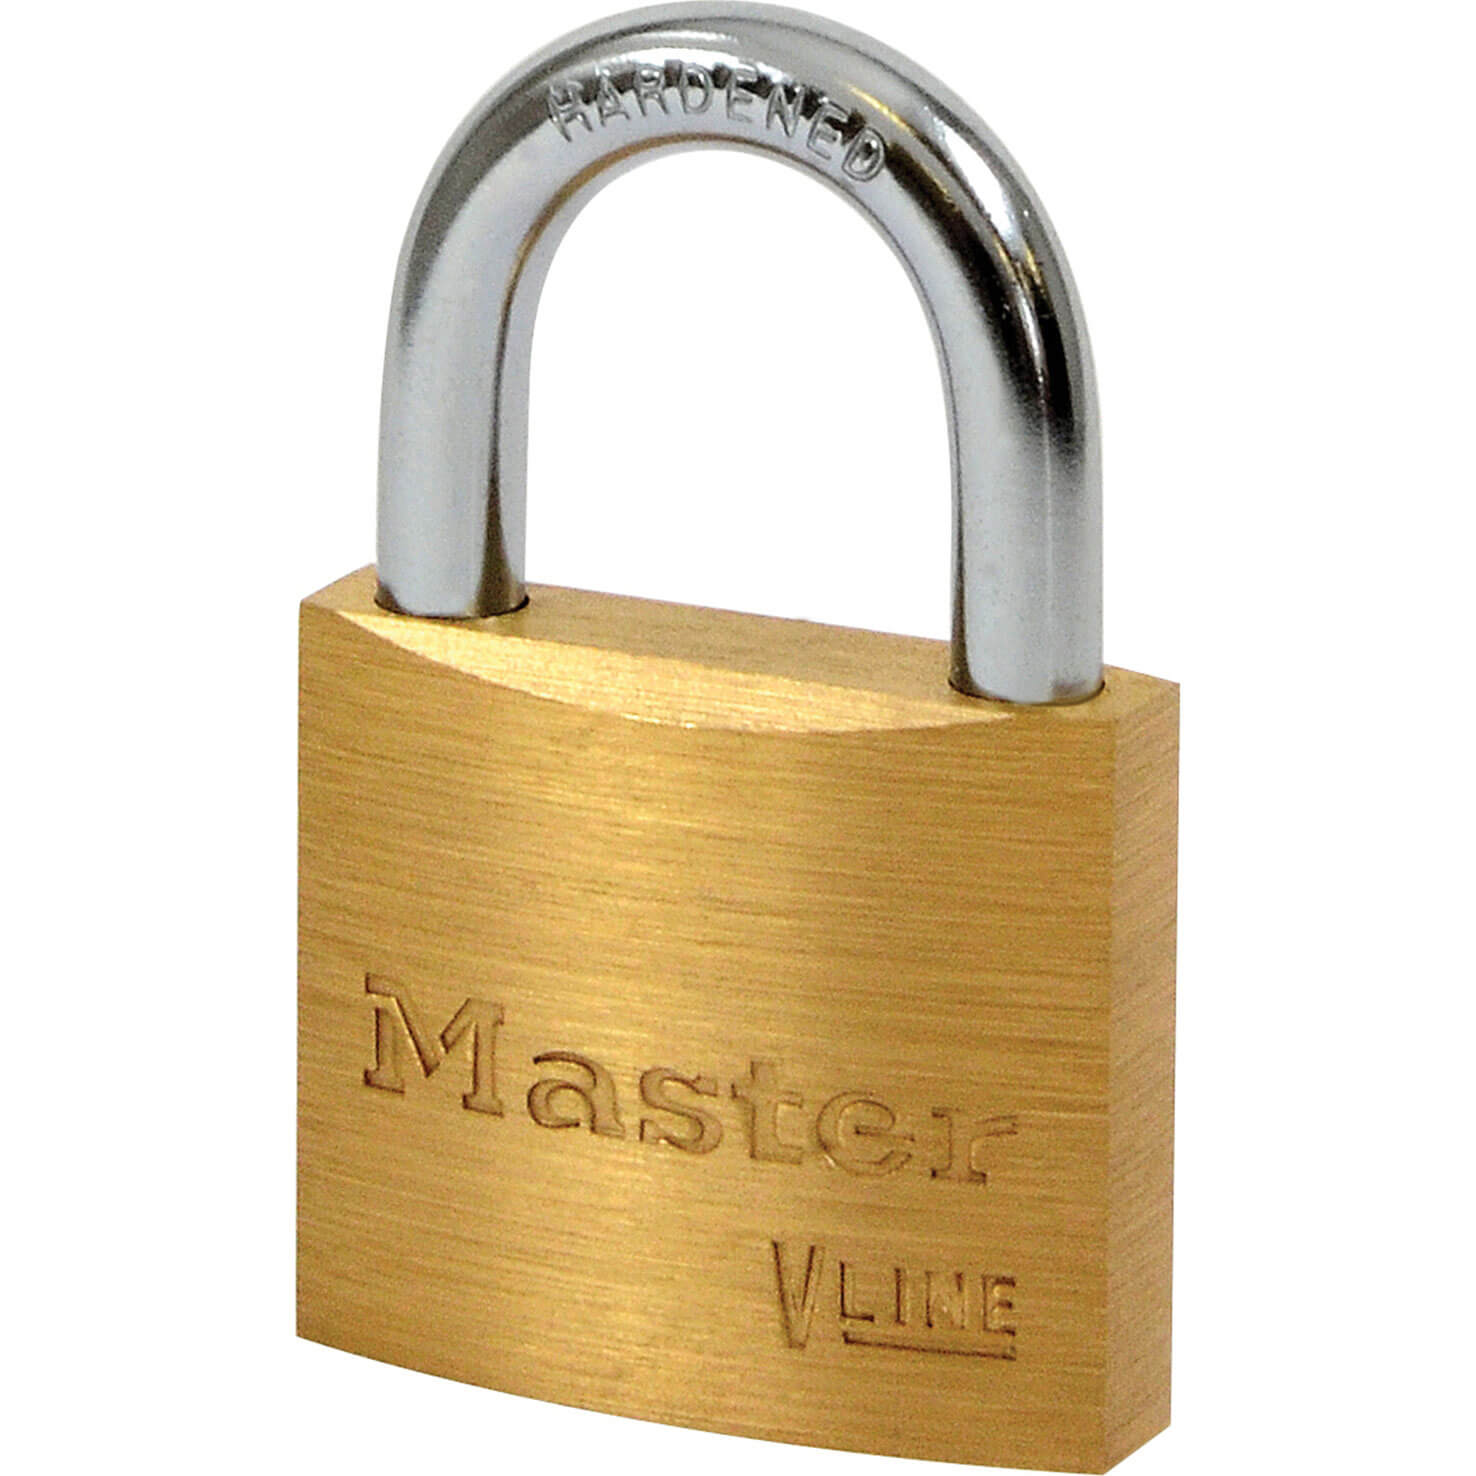 Photo of Masterlock V Line Brass Padlock Keyed Alike 40mm Standard 4232